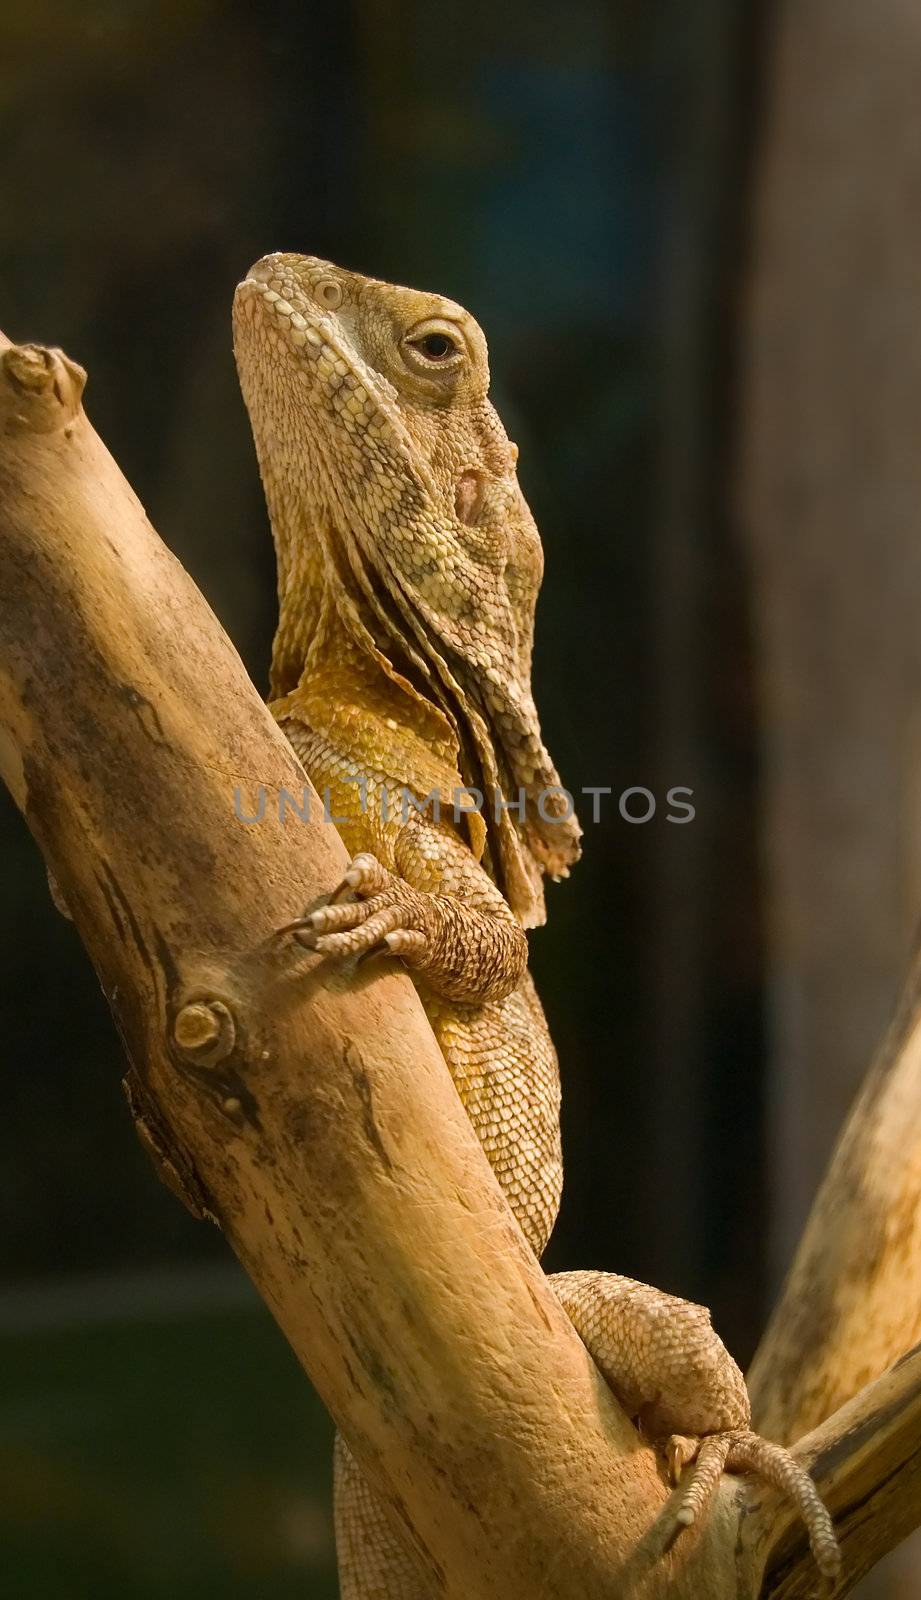 Lizard on a wood. by grekoff